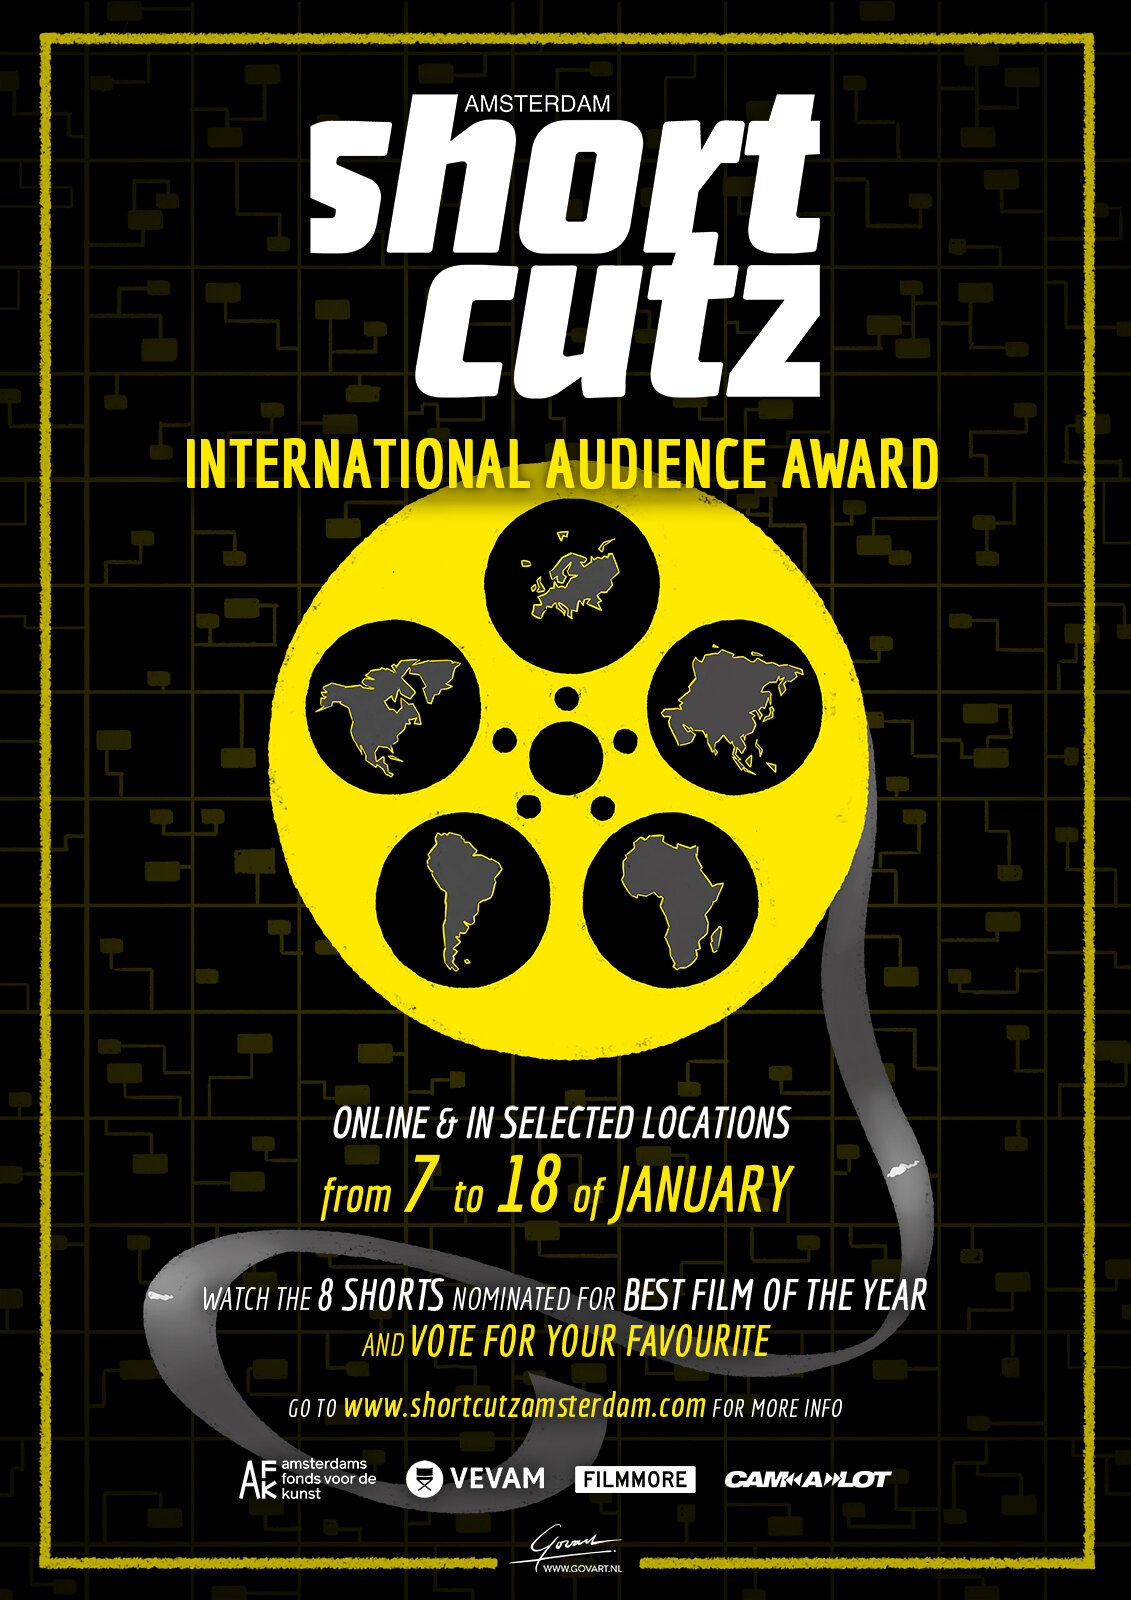 #4 International Audience Award